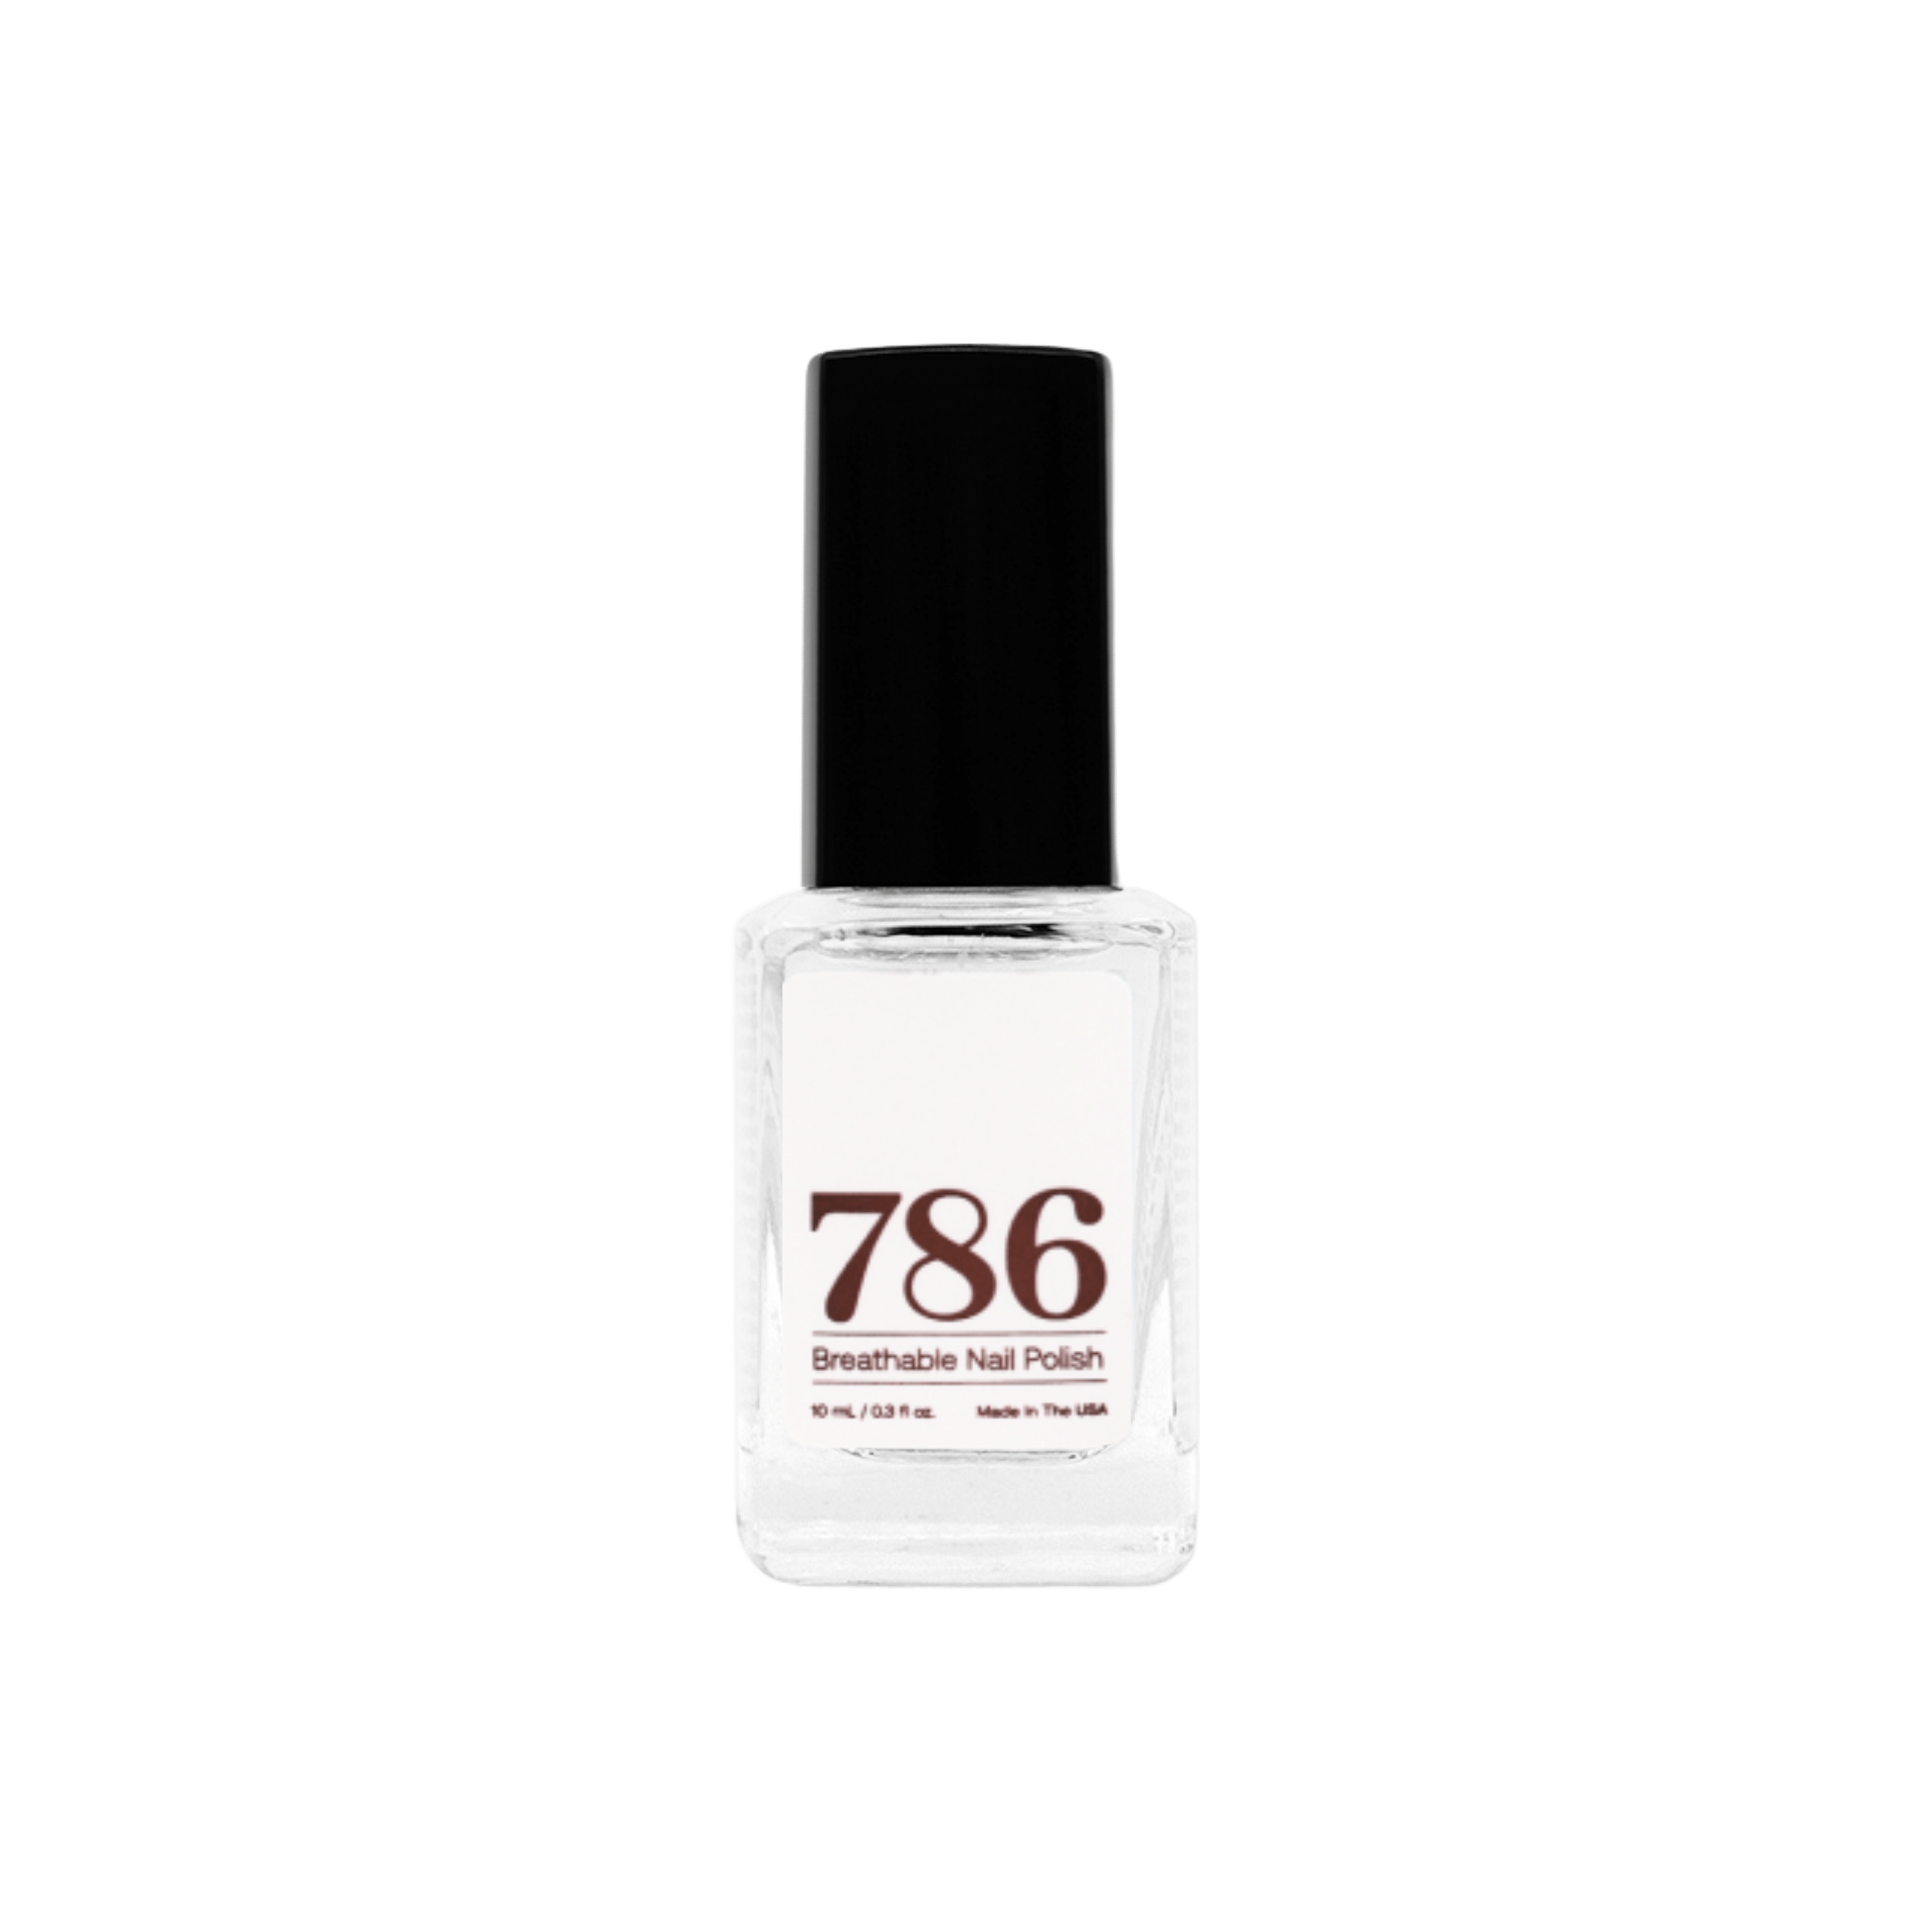 Top Coat Matte - Breathable Nail Polish - 786 Cosmetics